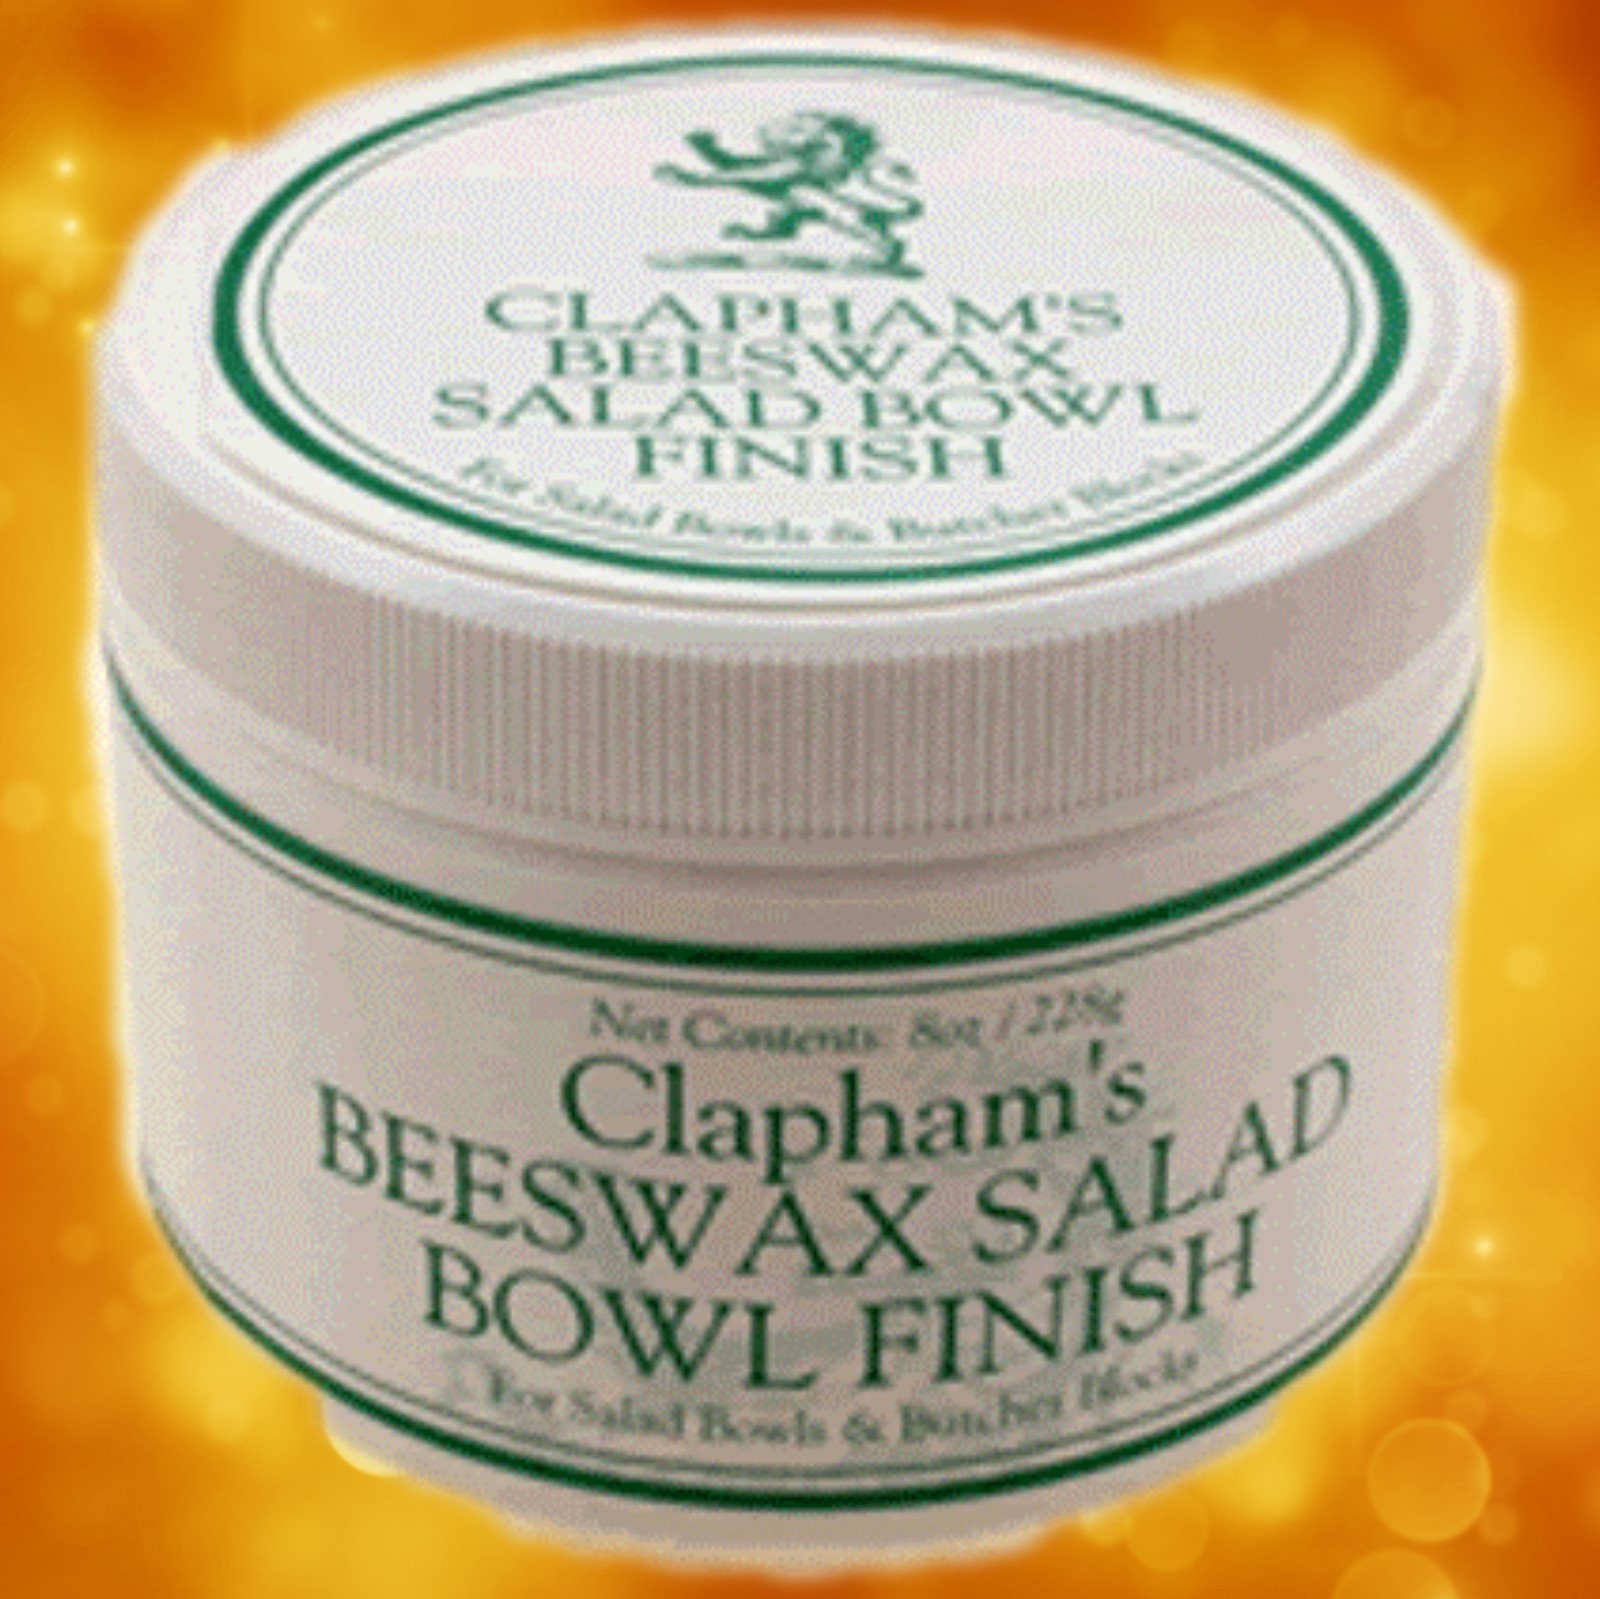 Clapham's Beeswax Salad Bowl Finish 870-3008 Clapham's Beeswax Salad Bowl Finish 870-3008